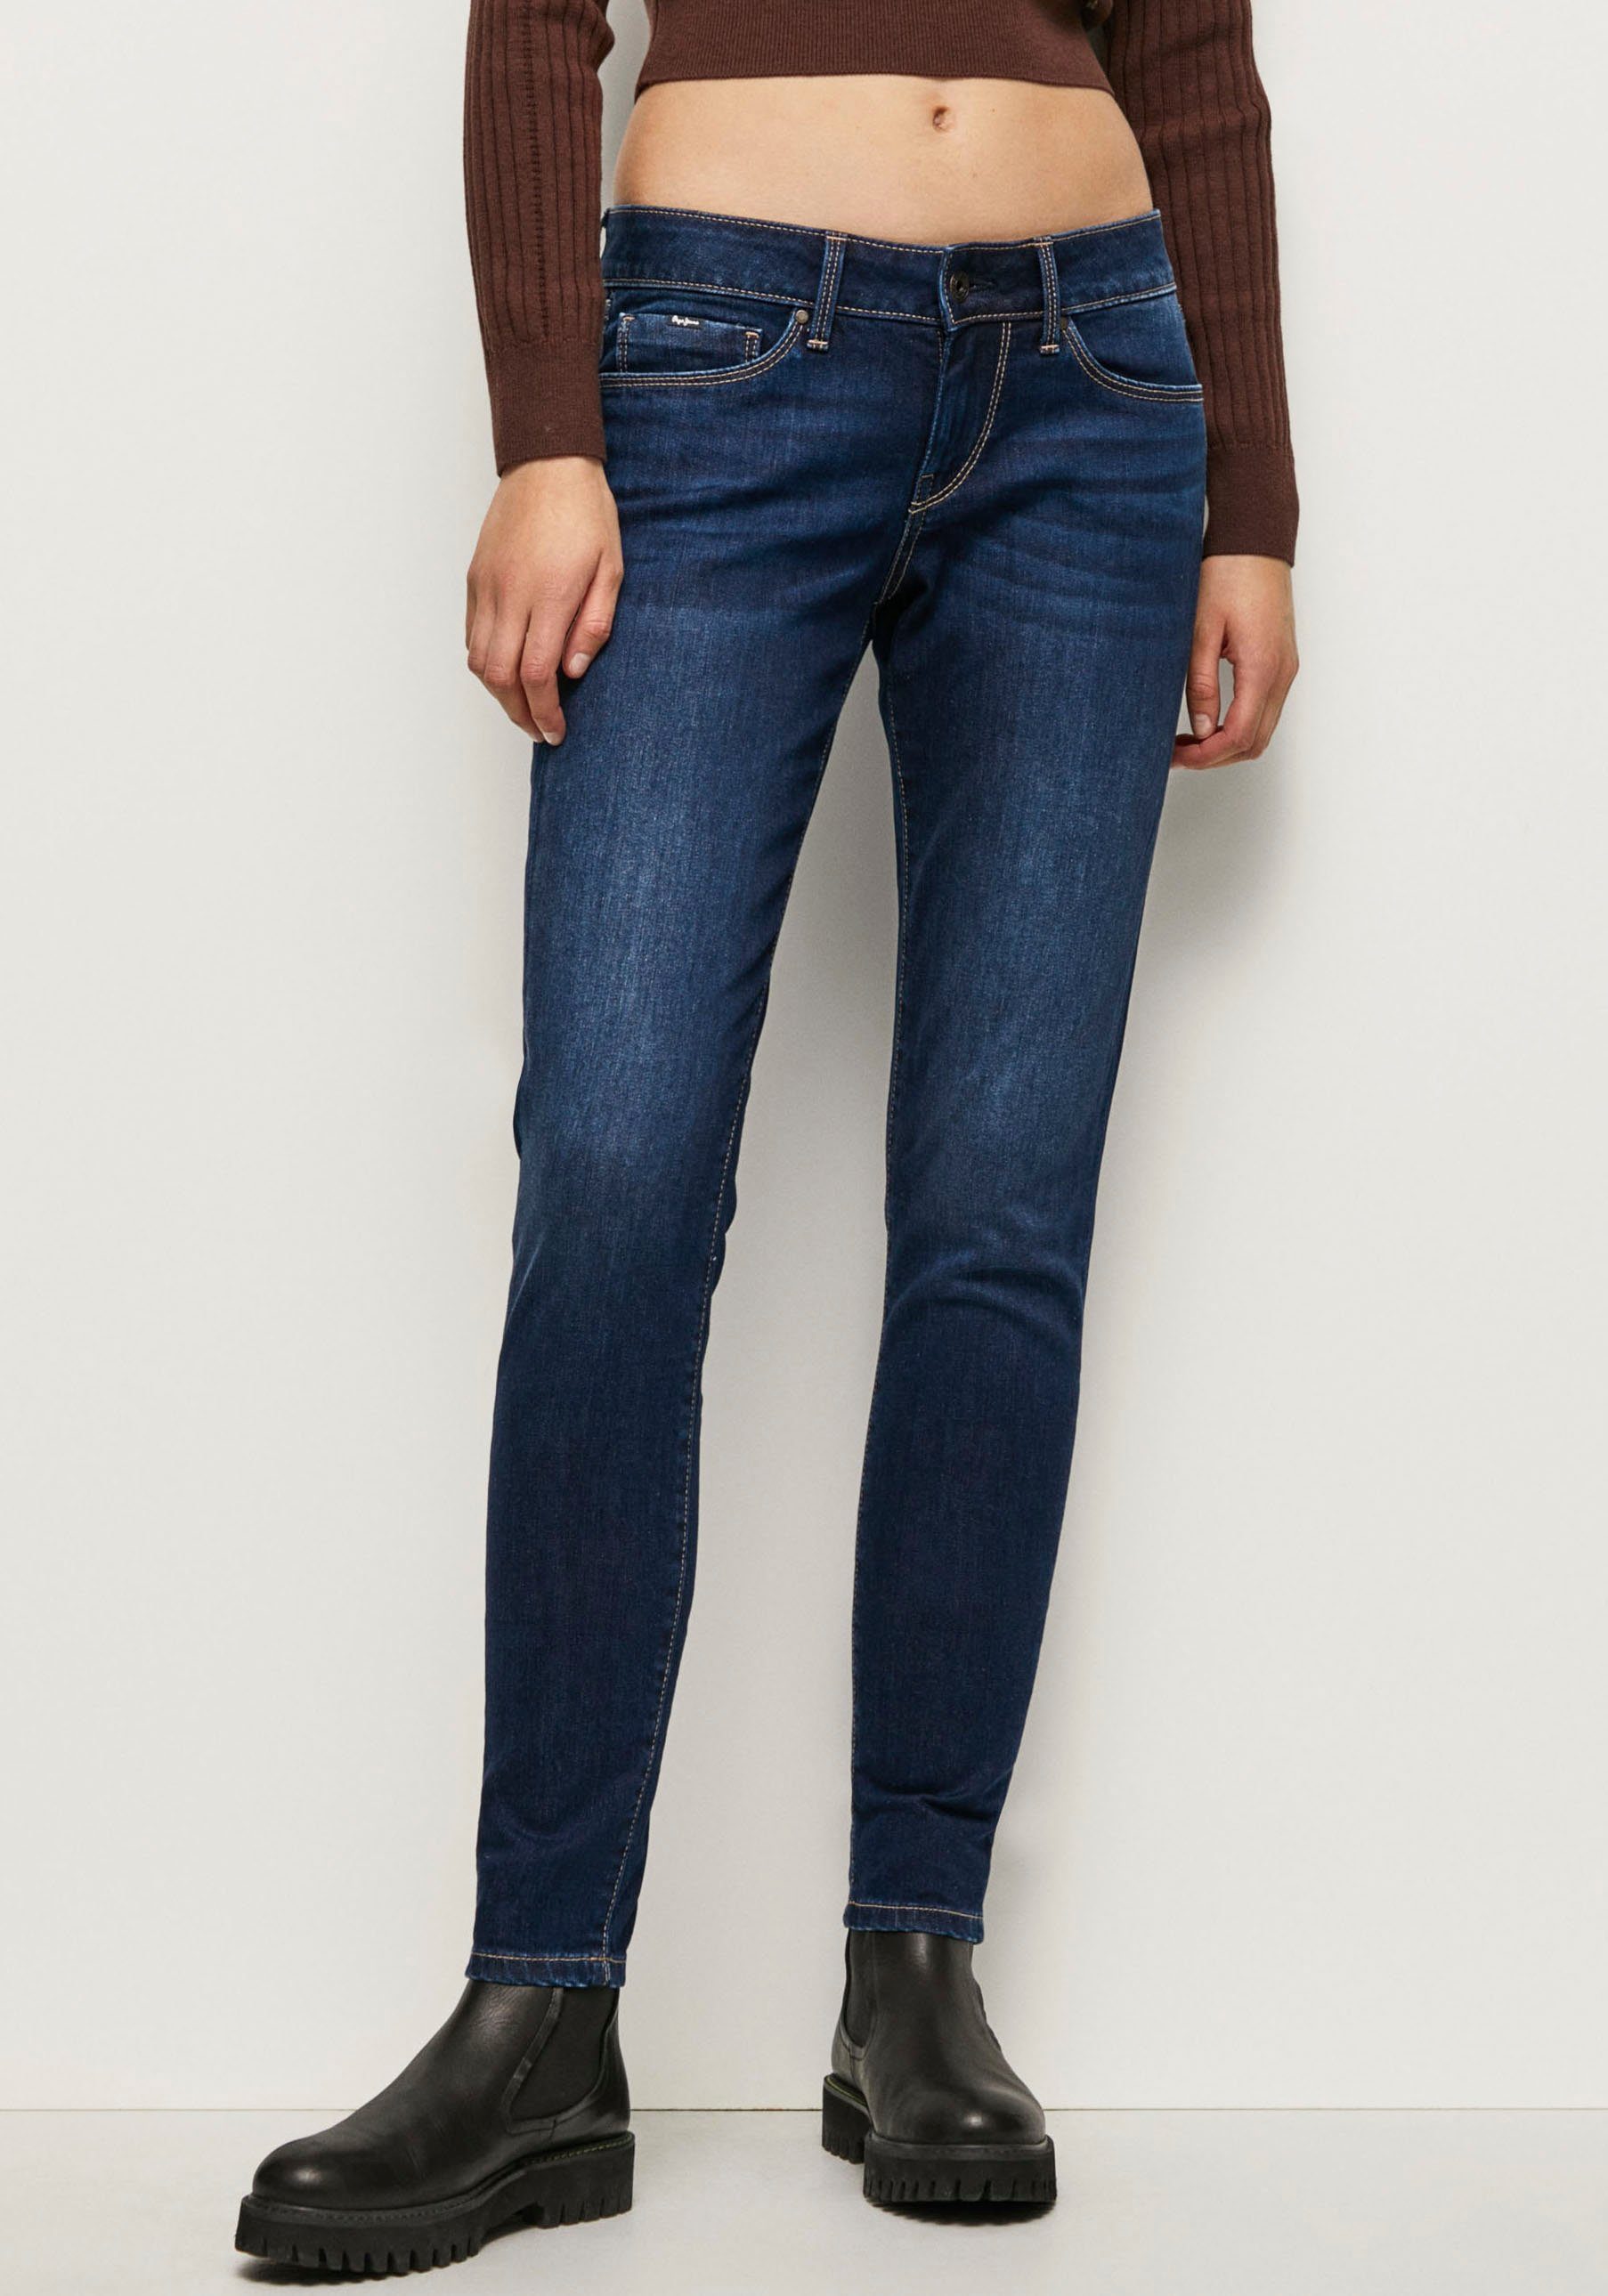 Pepe Jeans Skinny-fit-Jeans SOHO im 5-Pocket-Stil mit 1-Knopf Bund und Stretch-Anteil DARK USED